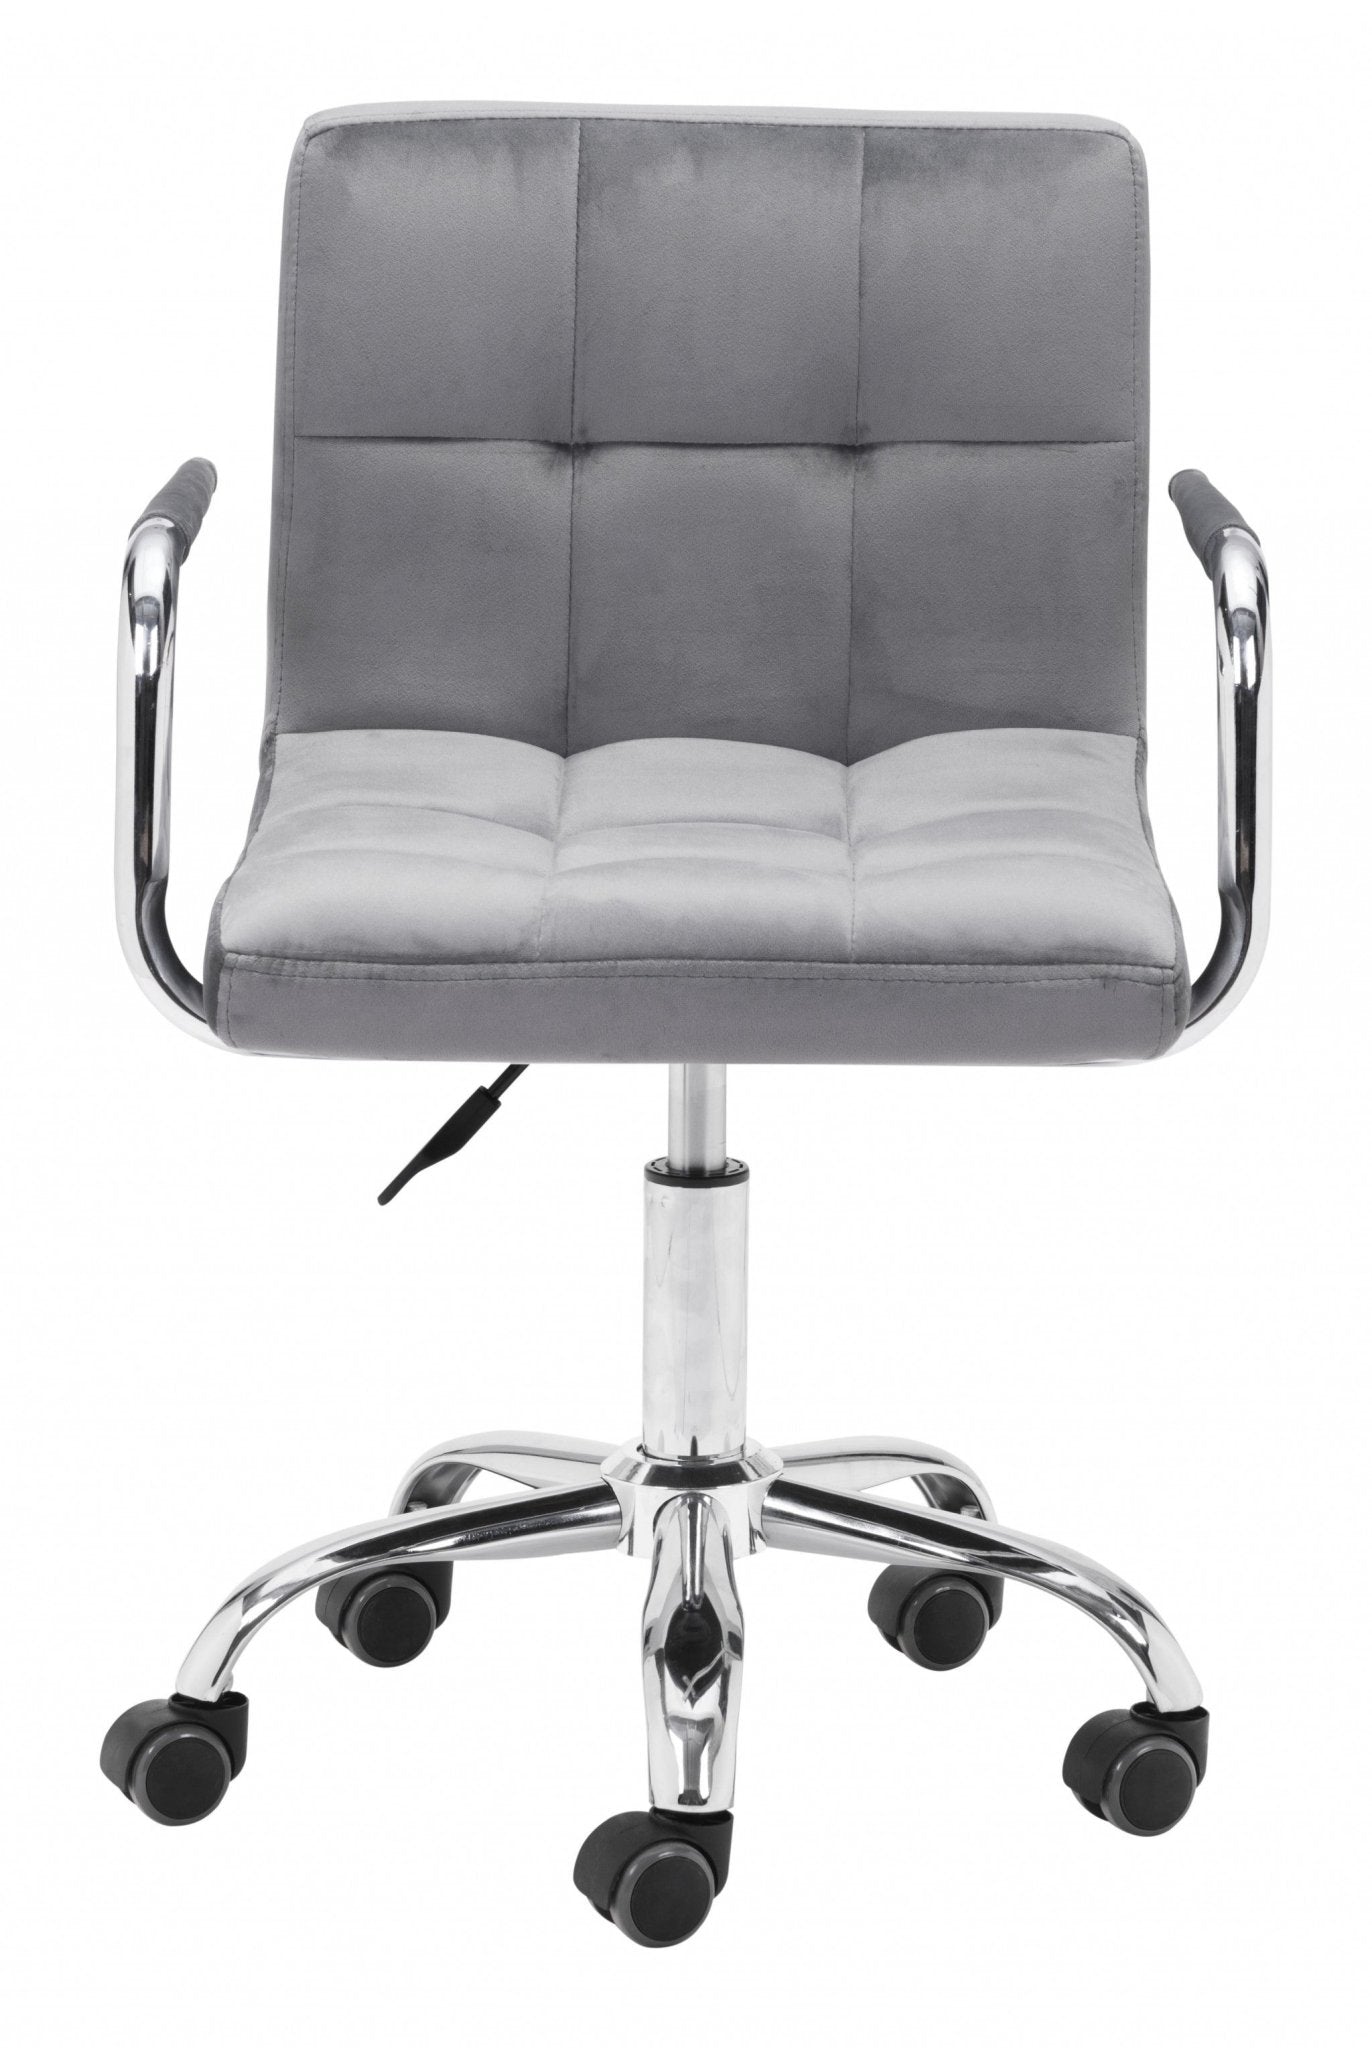 Gray Velvet Tufted Seat Swivel Adjustable Task Chair Metal Back Steel Frame - Tuesday Morning-Office Chairs